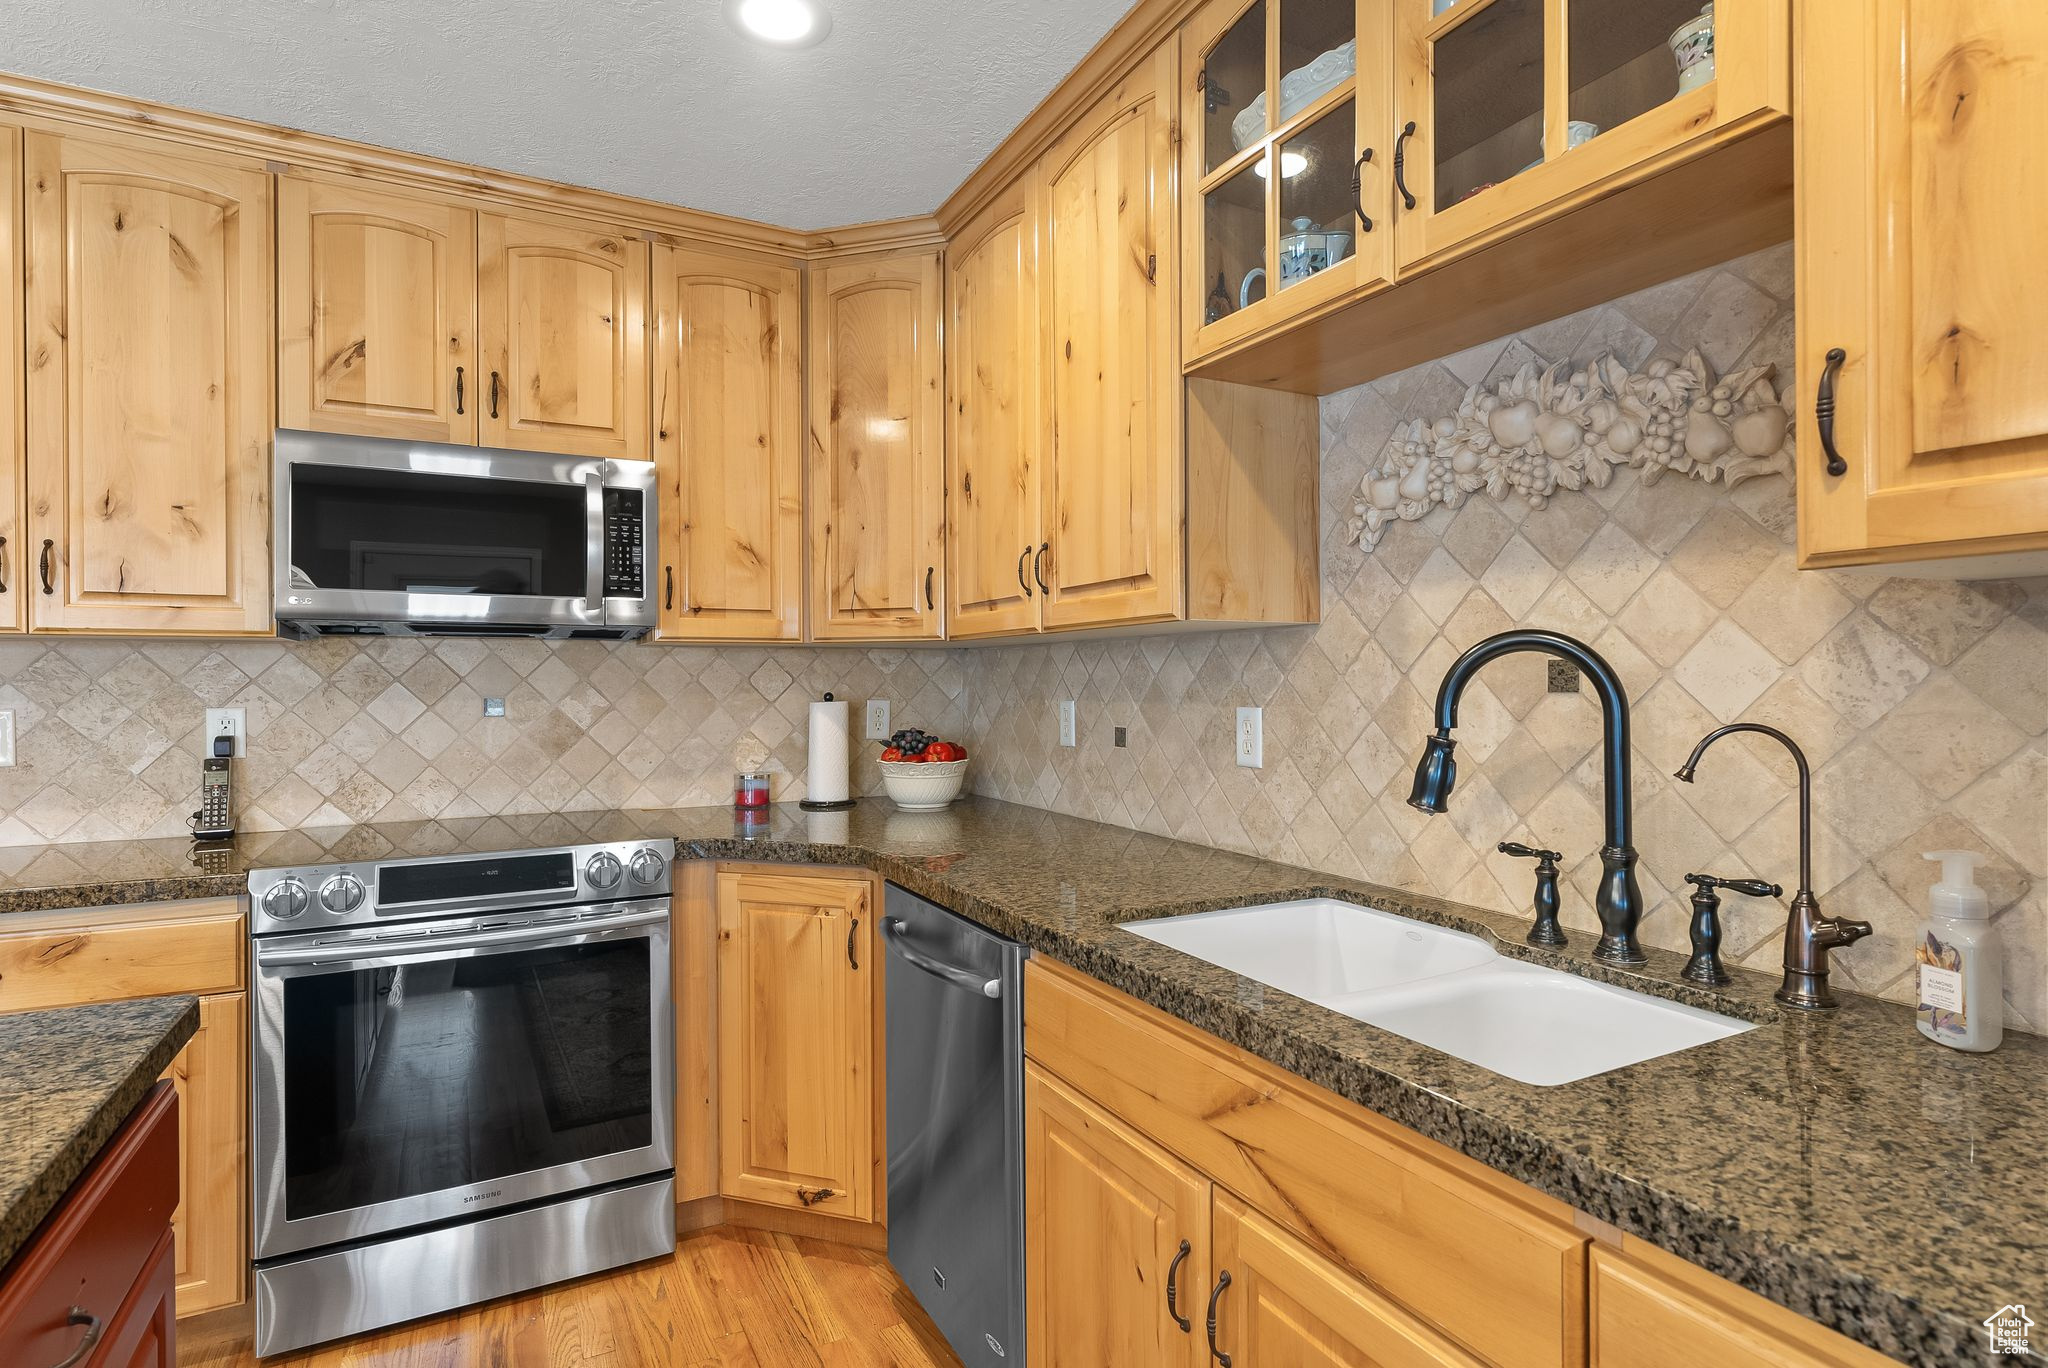 Kitchen featuring dark stone countertops, stainless steel appliances, light wood-type flooring, backsplash, and sink